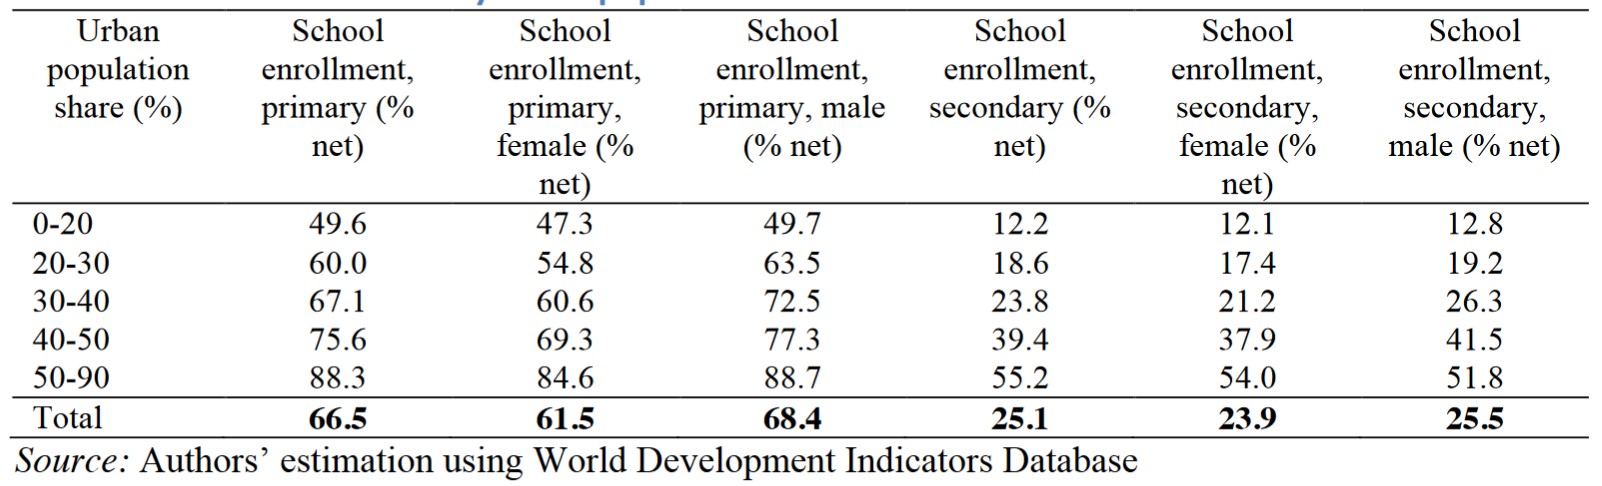 Africa Urbanization and Schooling